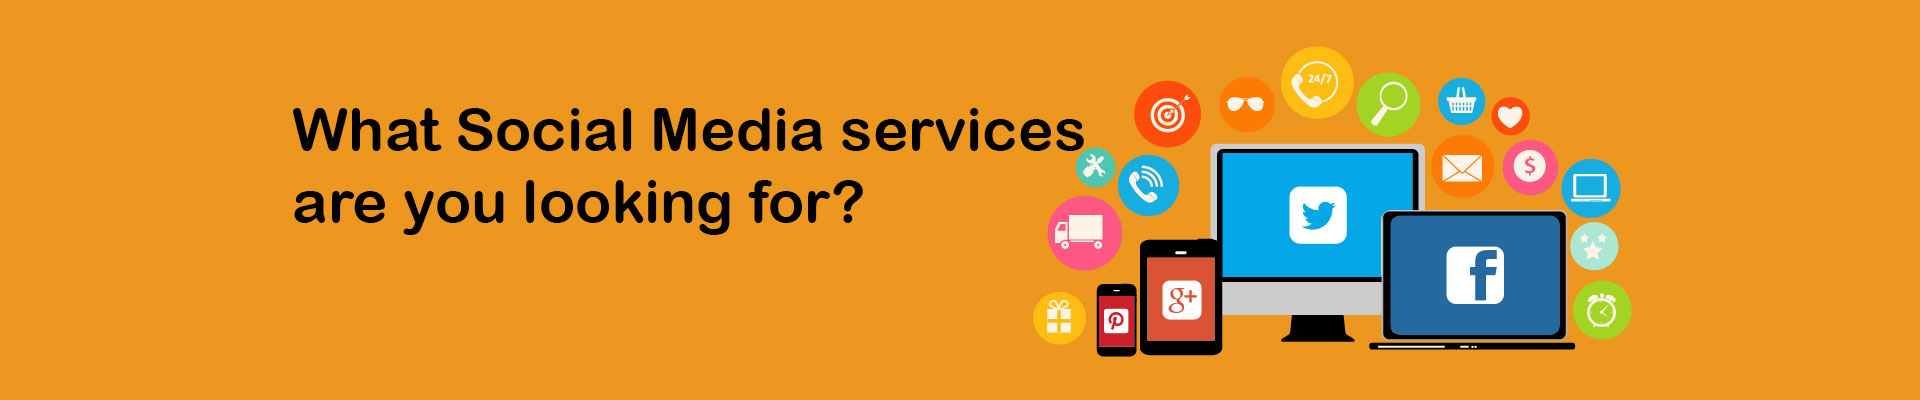 do you need social media services banner